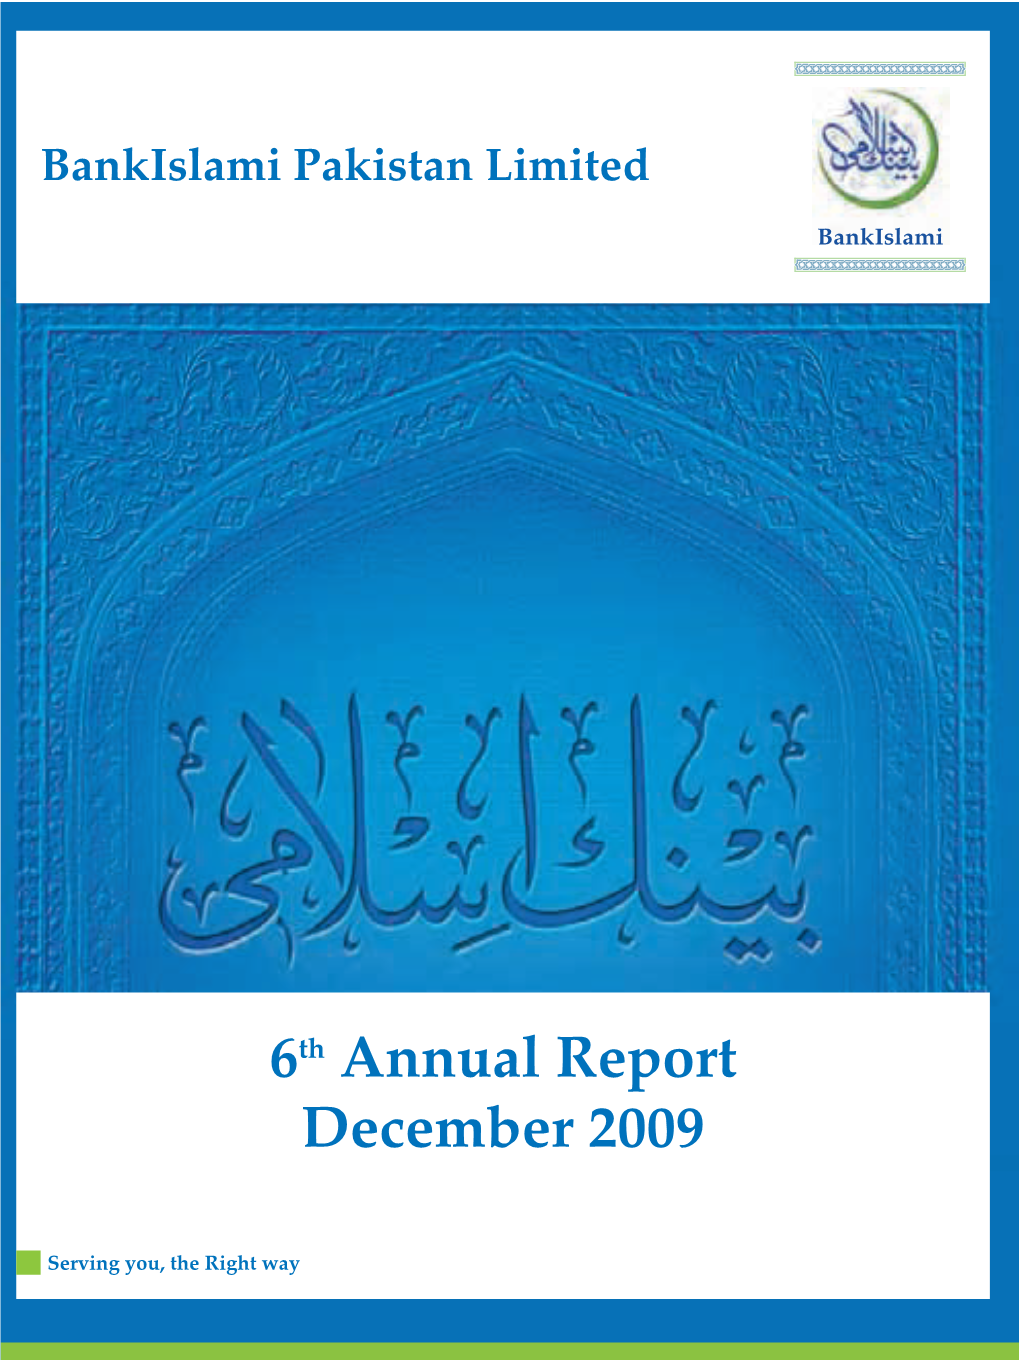 Bankislami Annual Report 2009